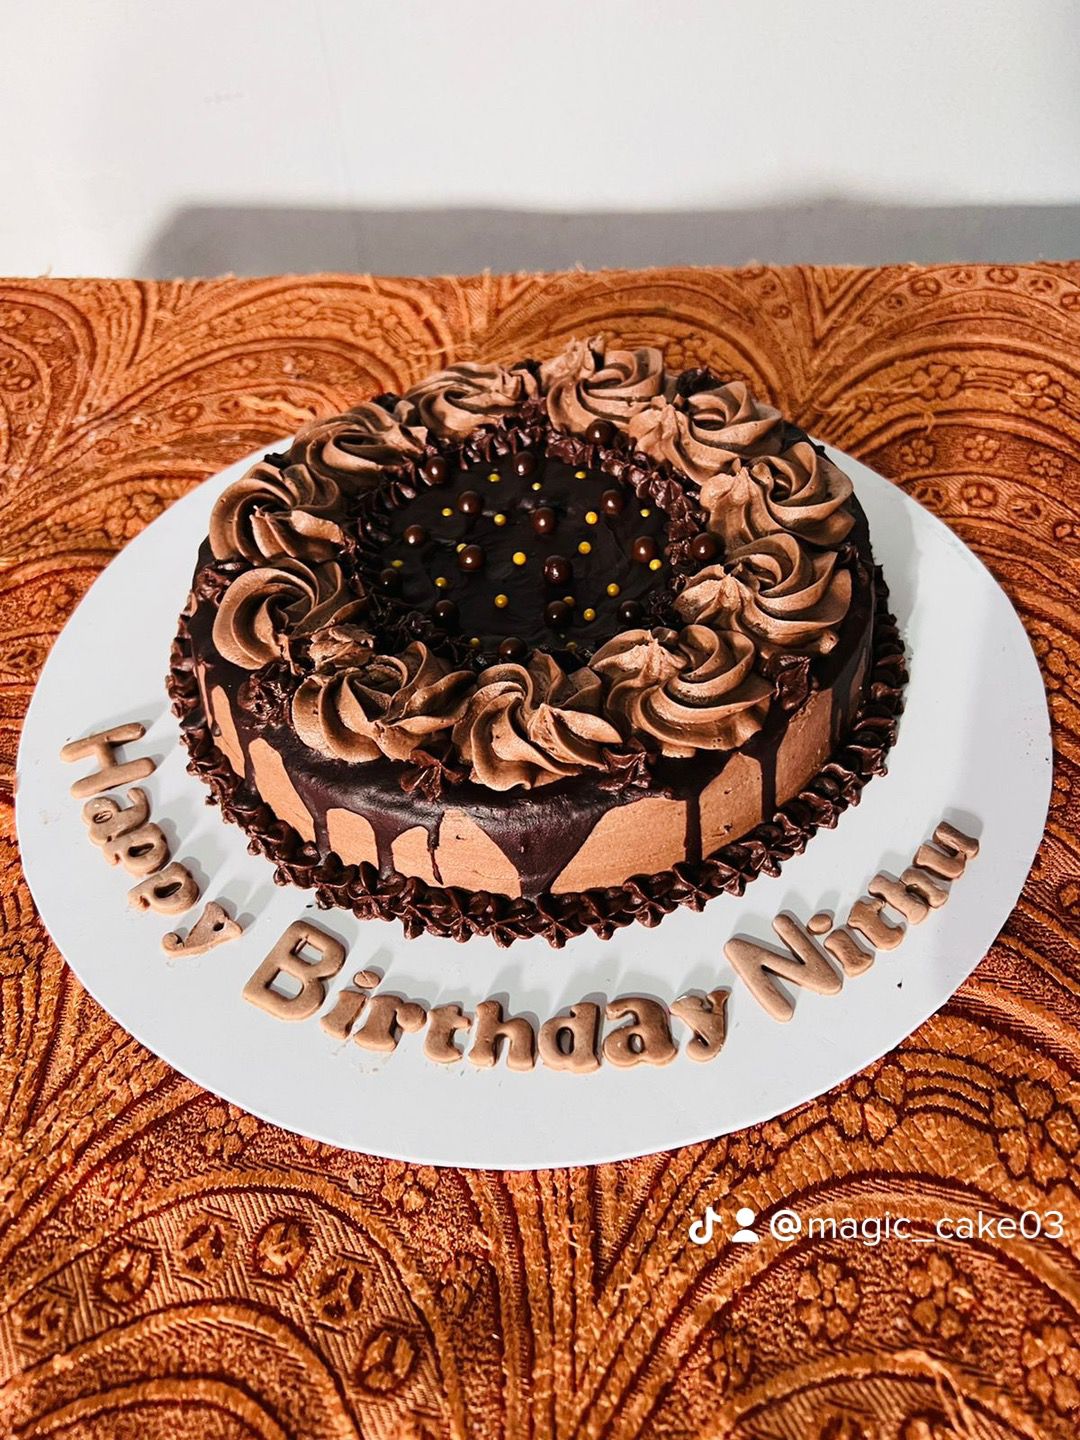 BIRTHDAY CAKE[Cakes]